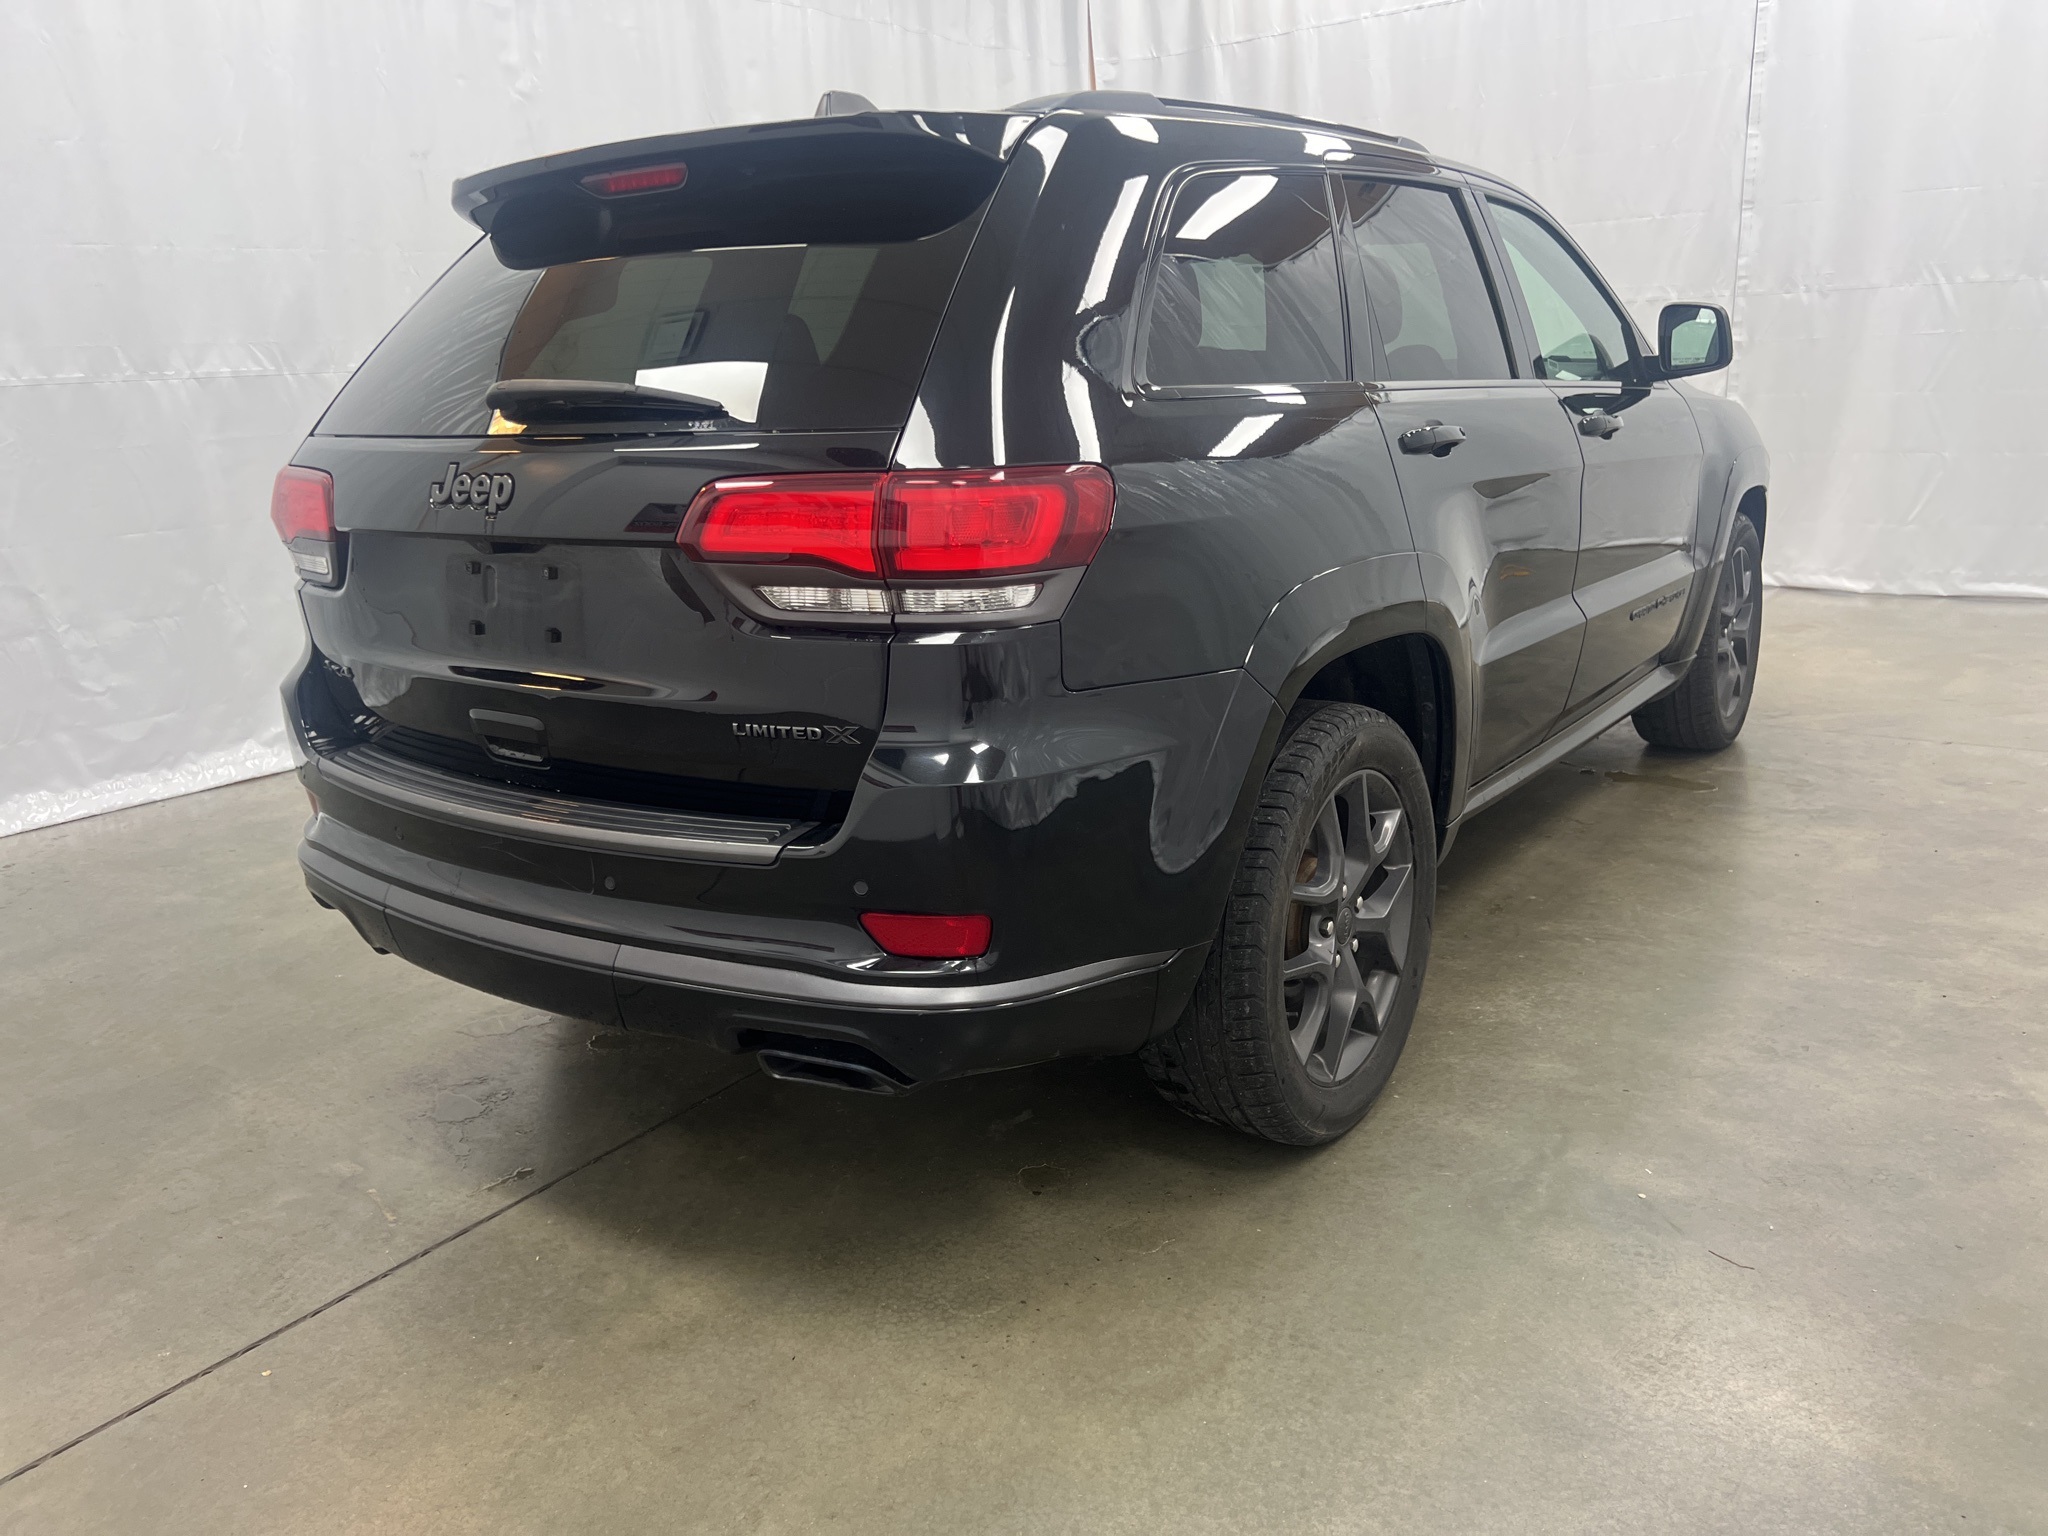 2019 Jeep Grand Cherokee Limited X 4